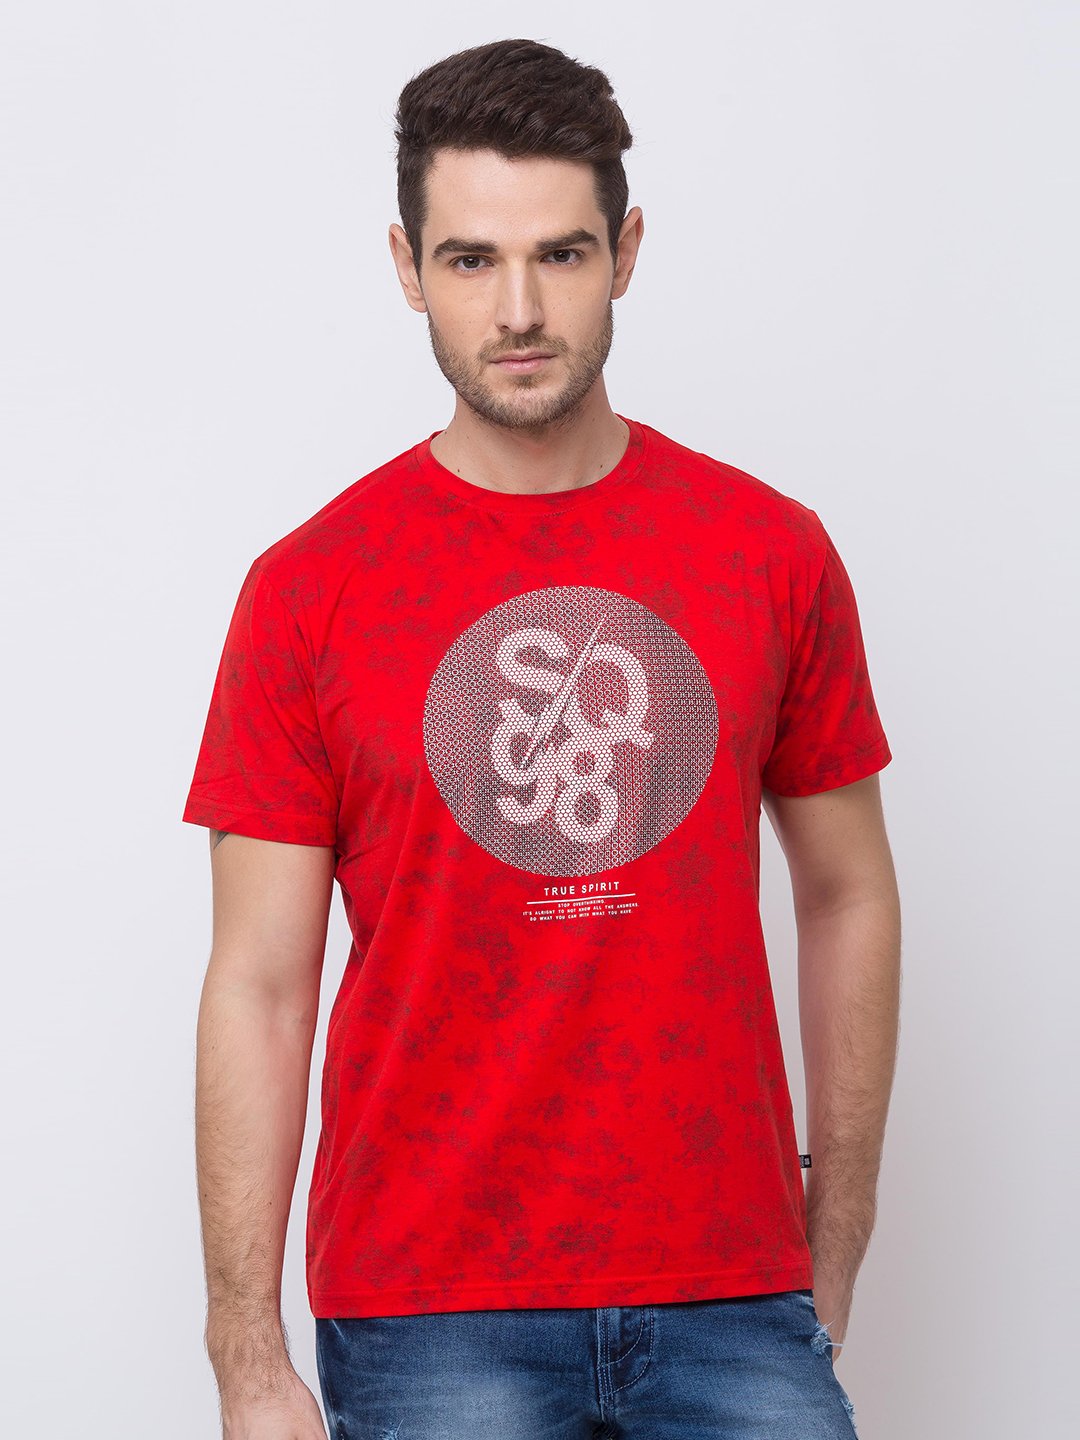 Status Quo |Red Round Neck T-Shirt - M, L, XL, XXL